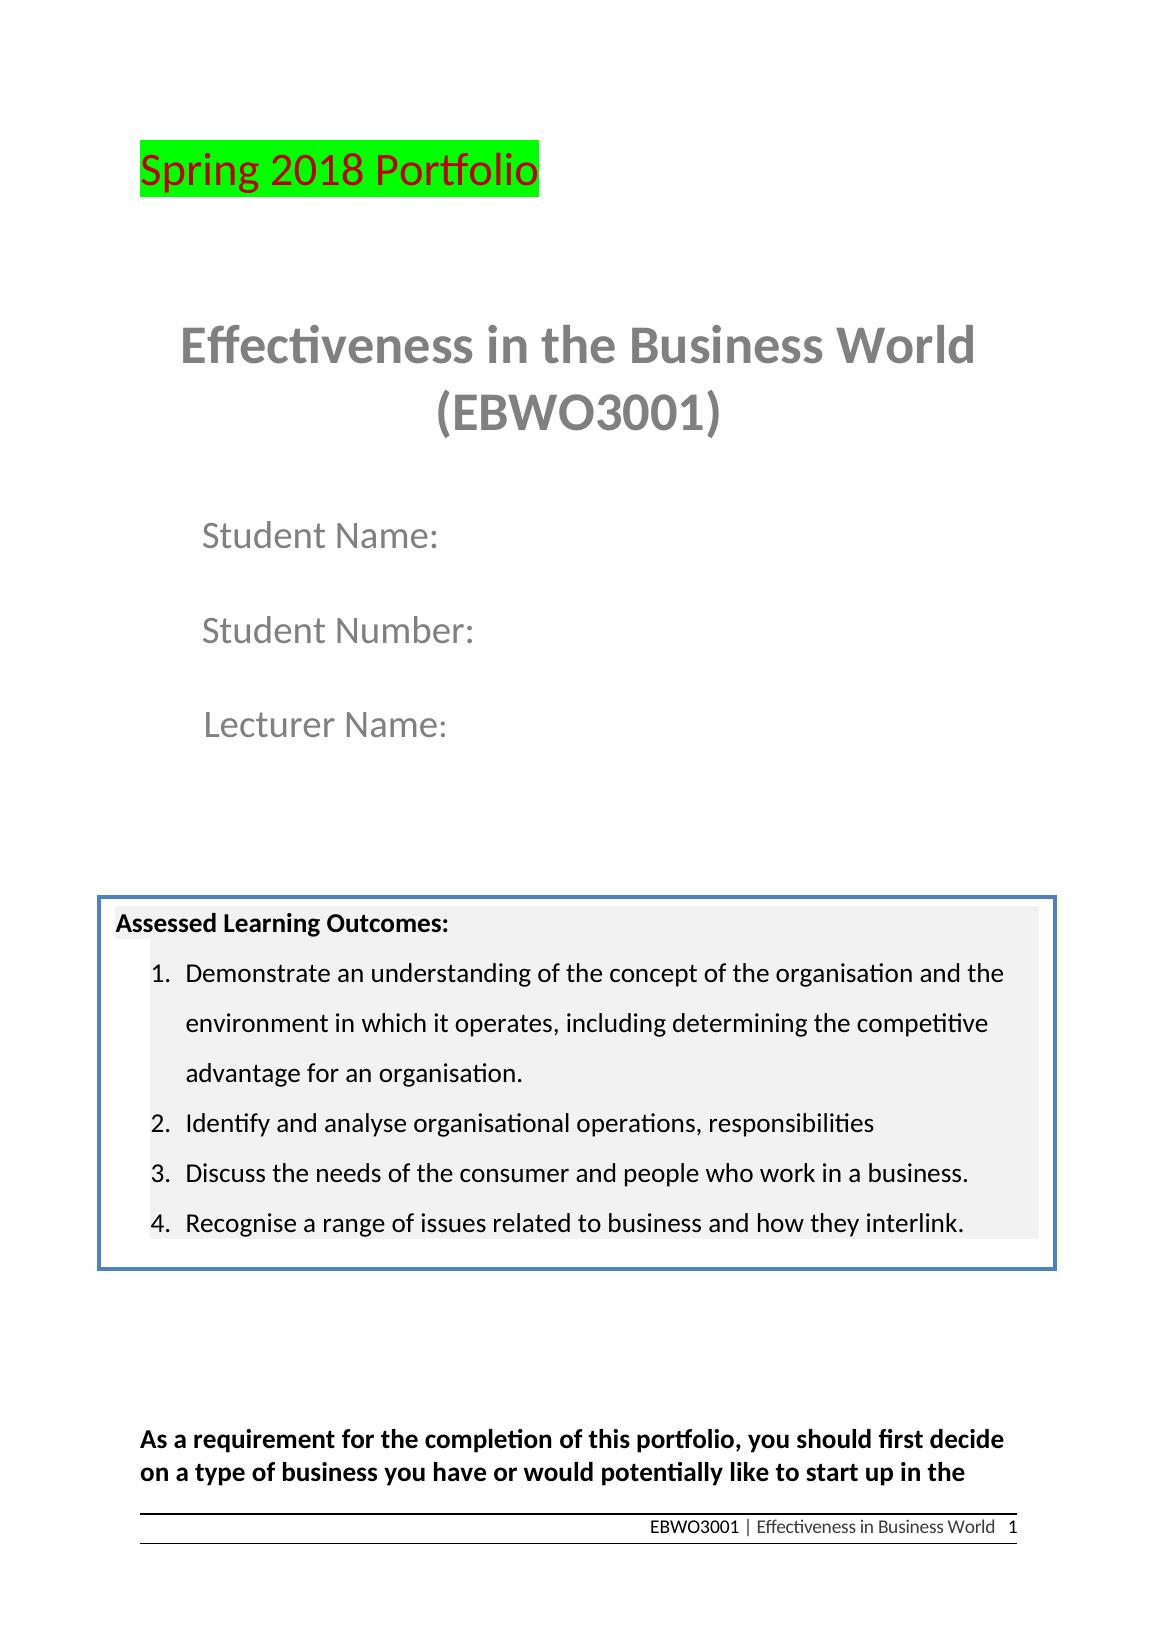 Portfolio Effectiveness in the Business World_1